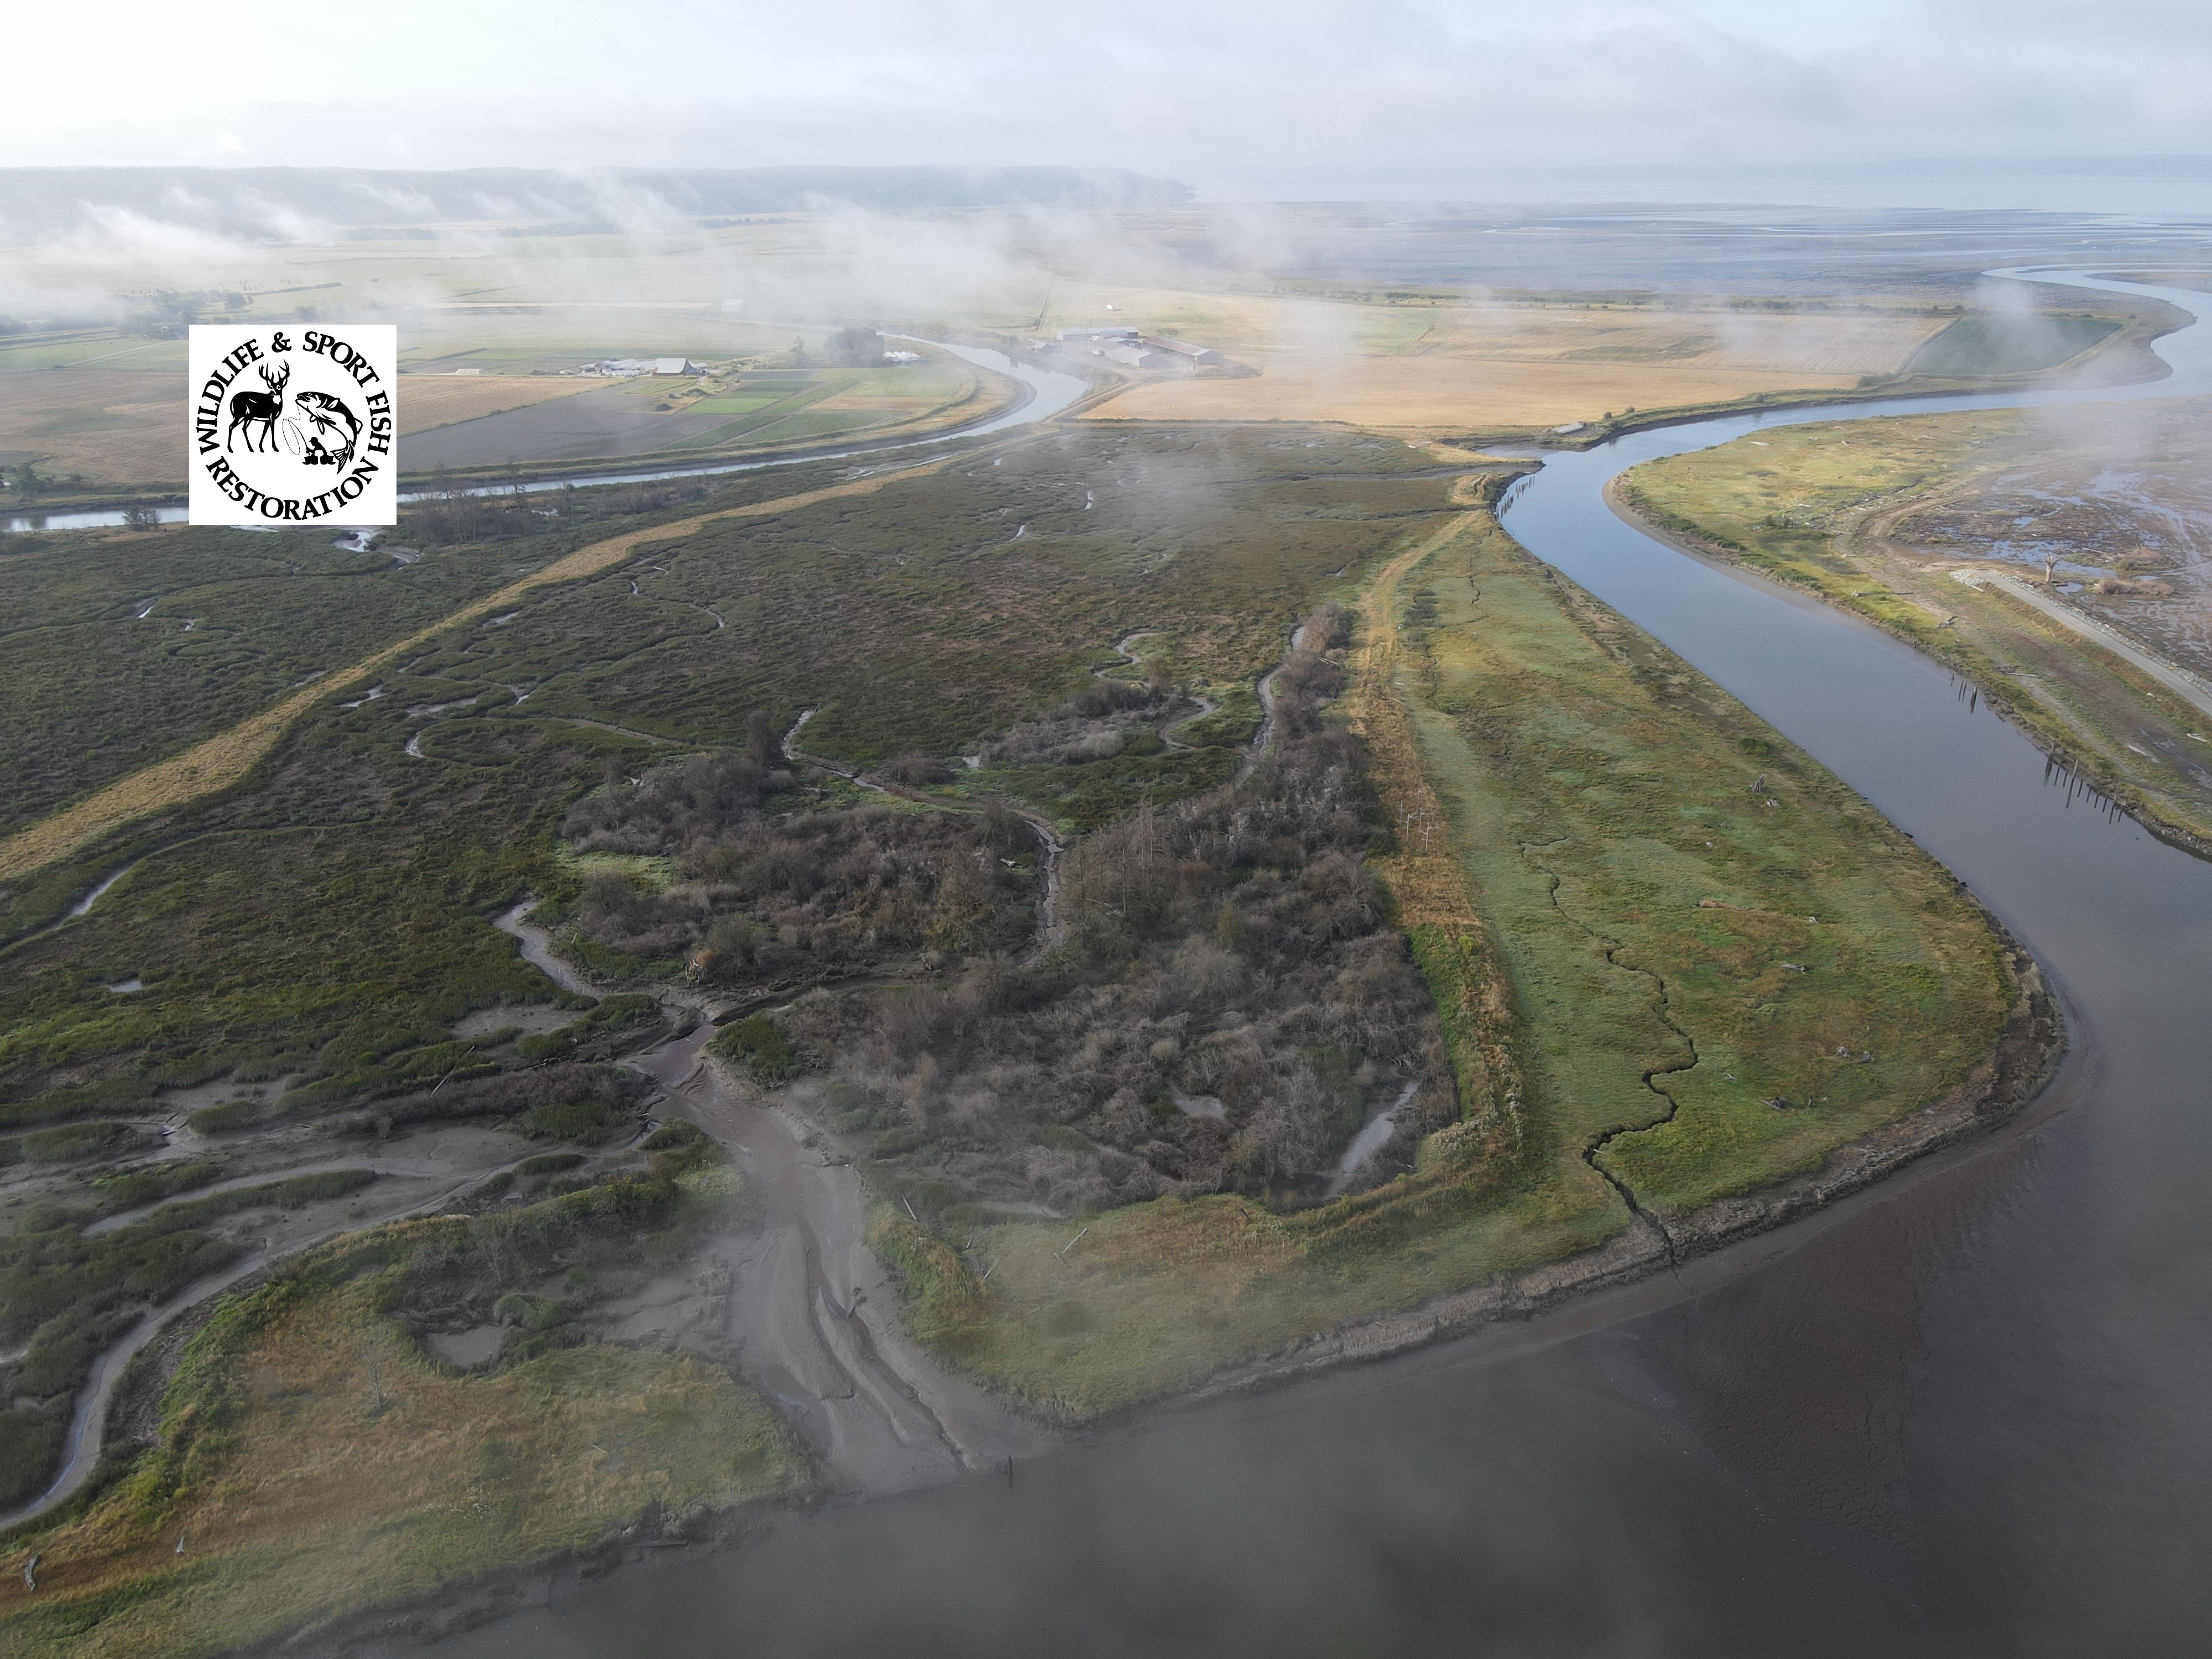 Aerial view of zis-a-ba coastal restoration project, Snohomish County, Washington